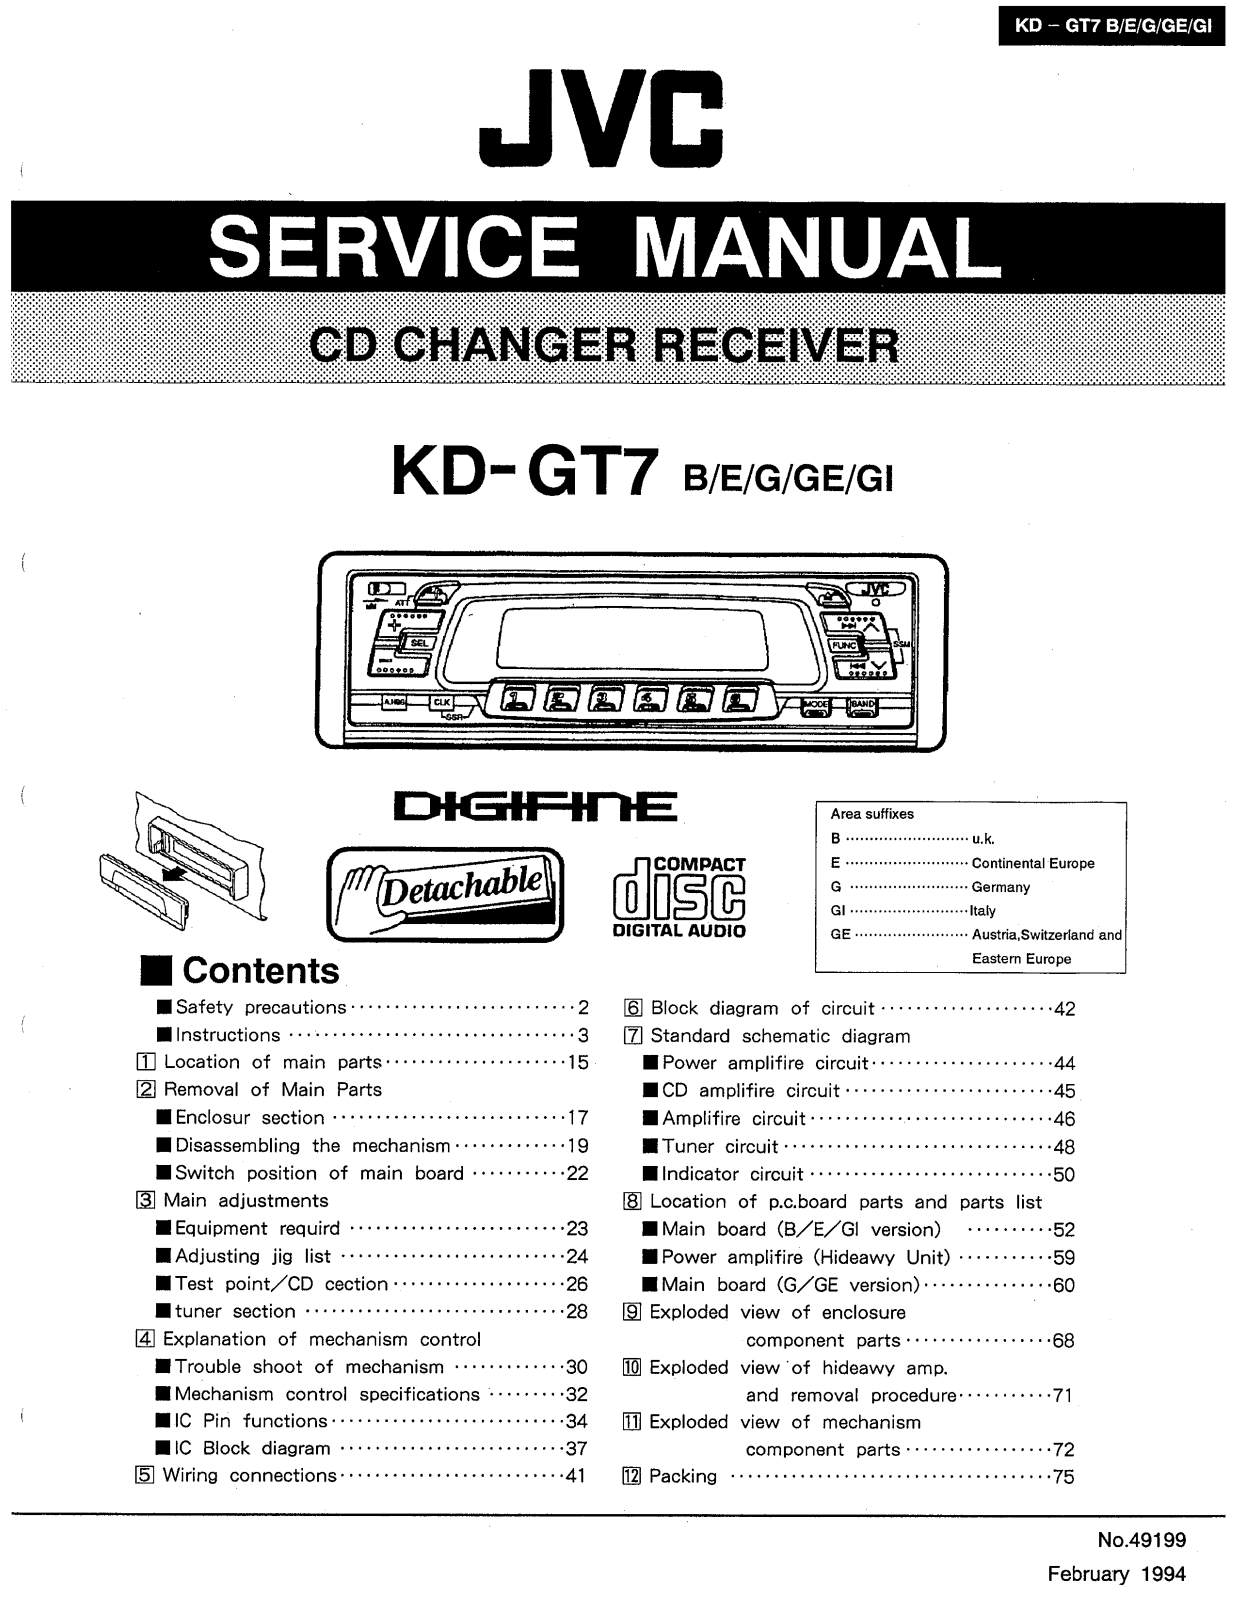 Jvc KD-GT7 Service Manual